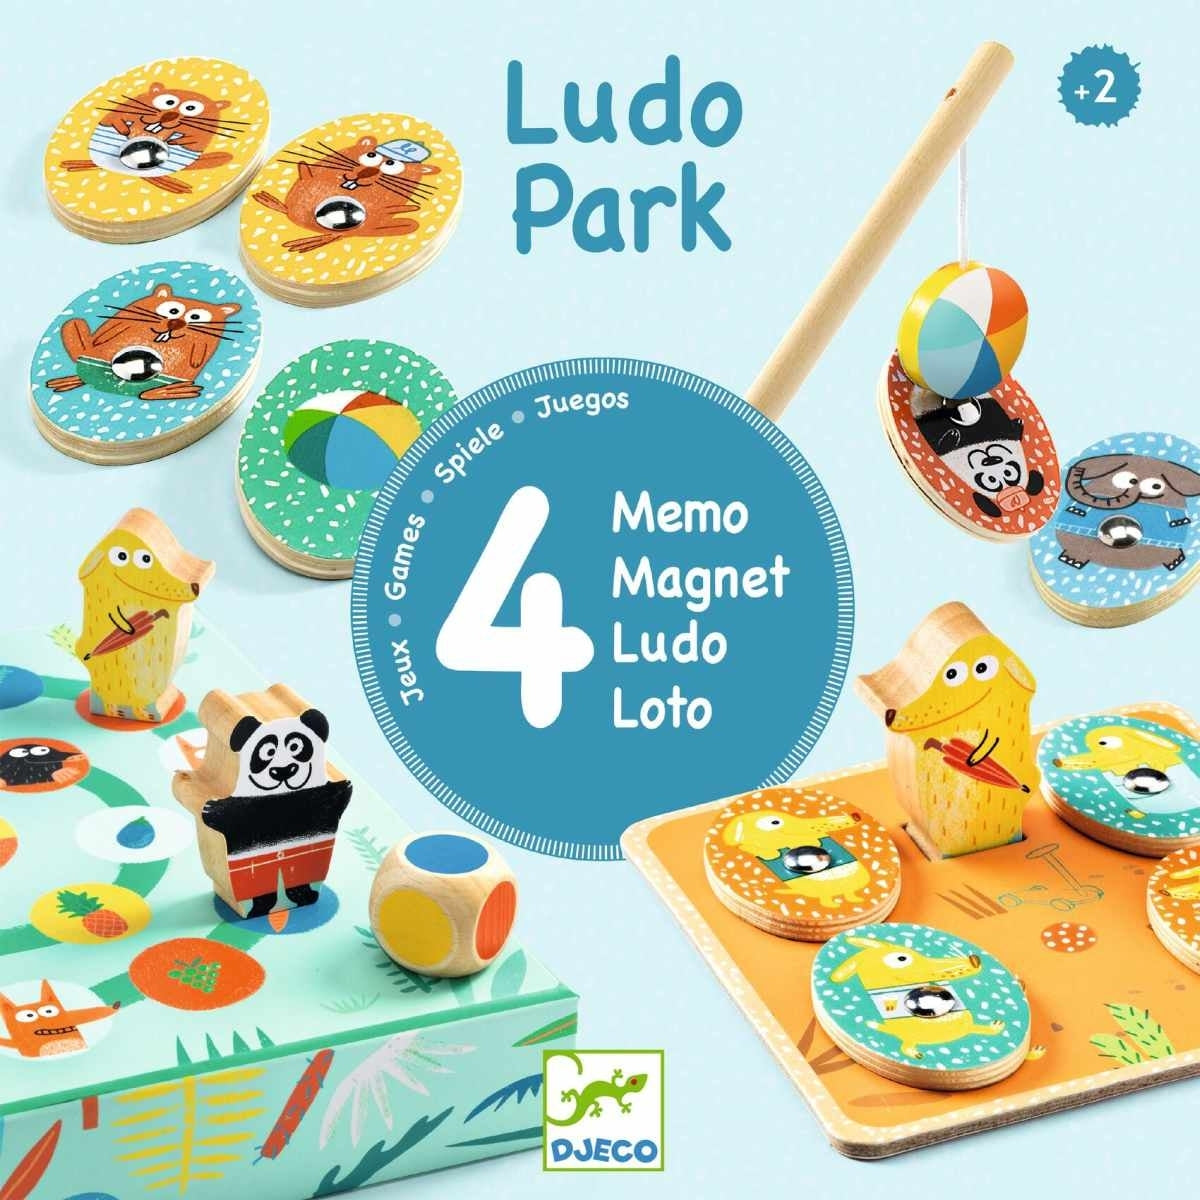 Ludo Park - 4 Games in 1